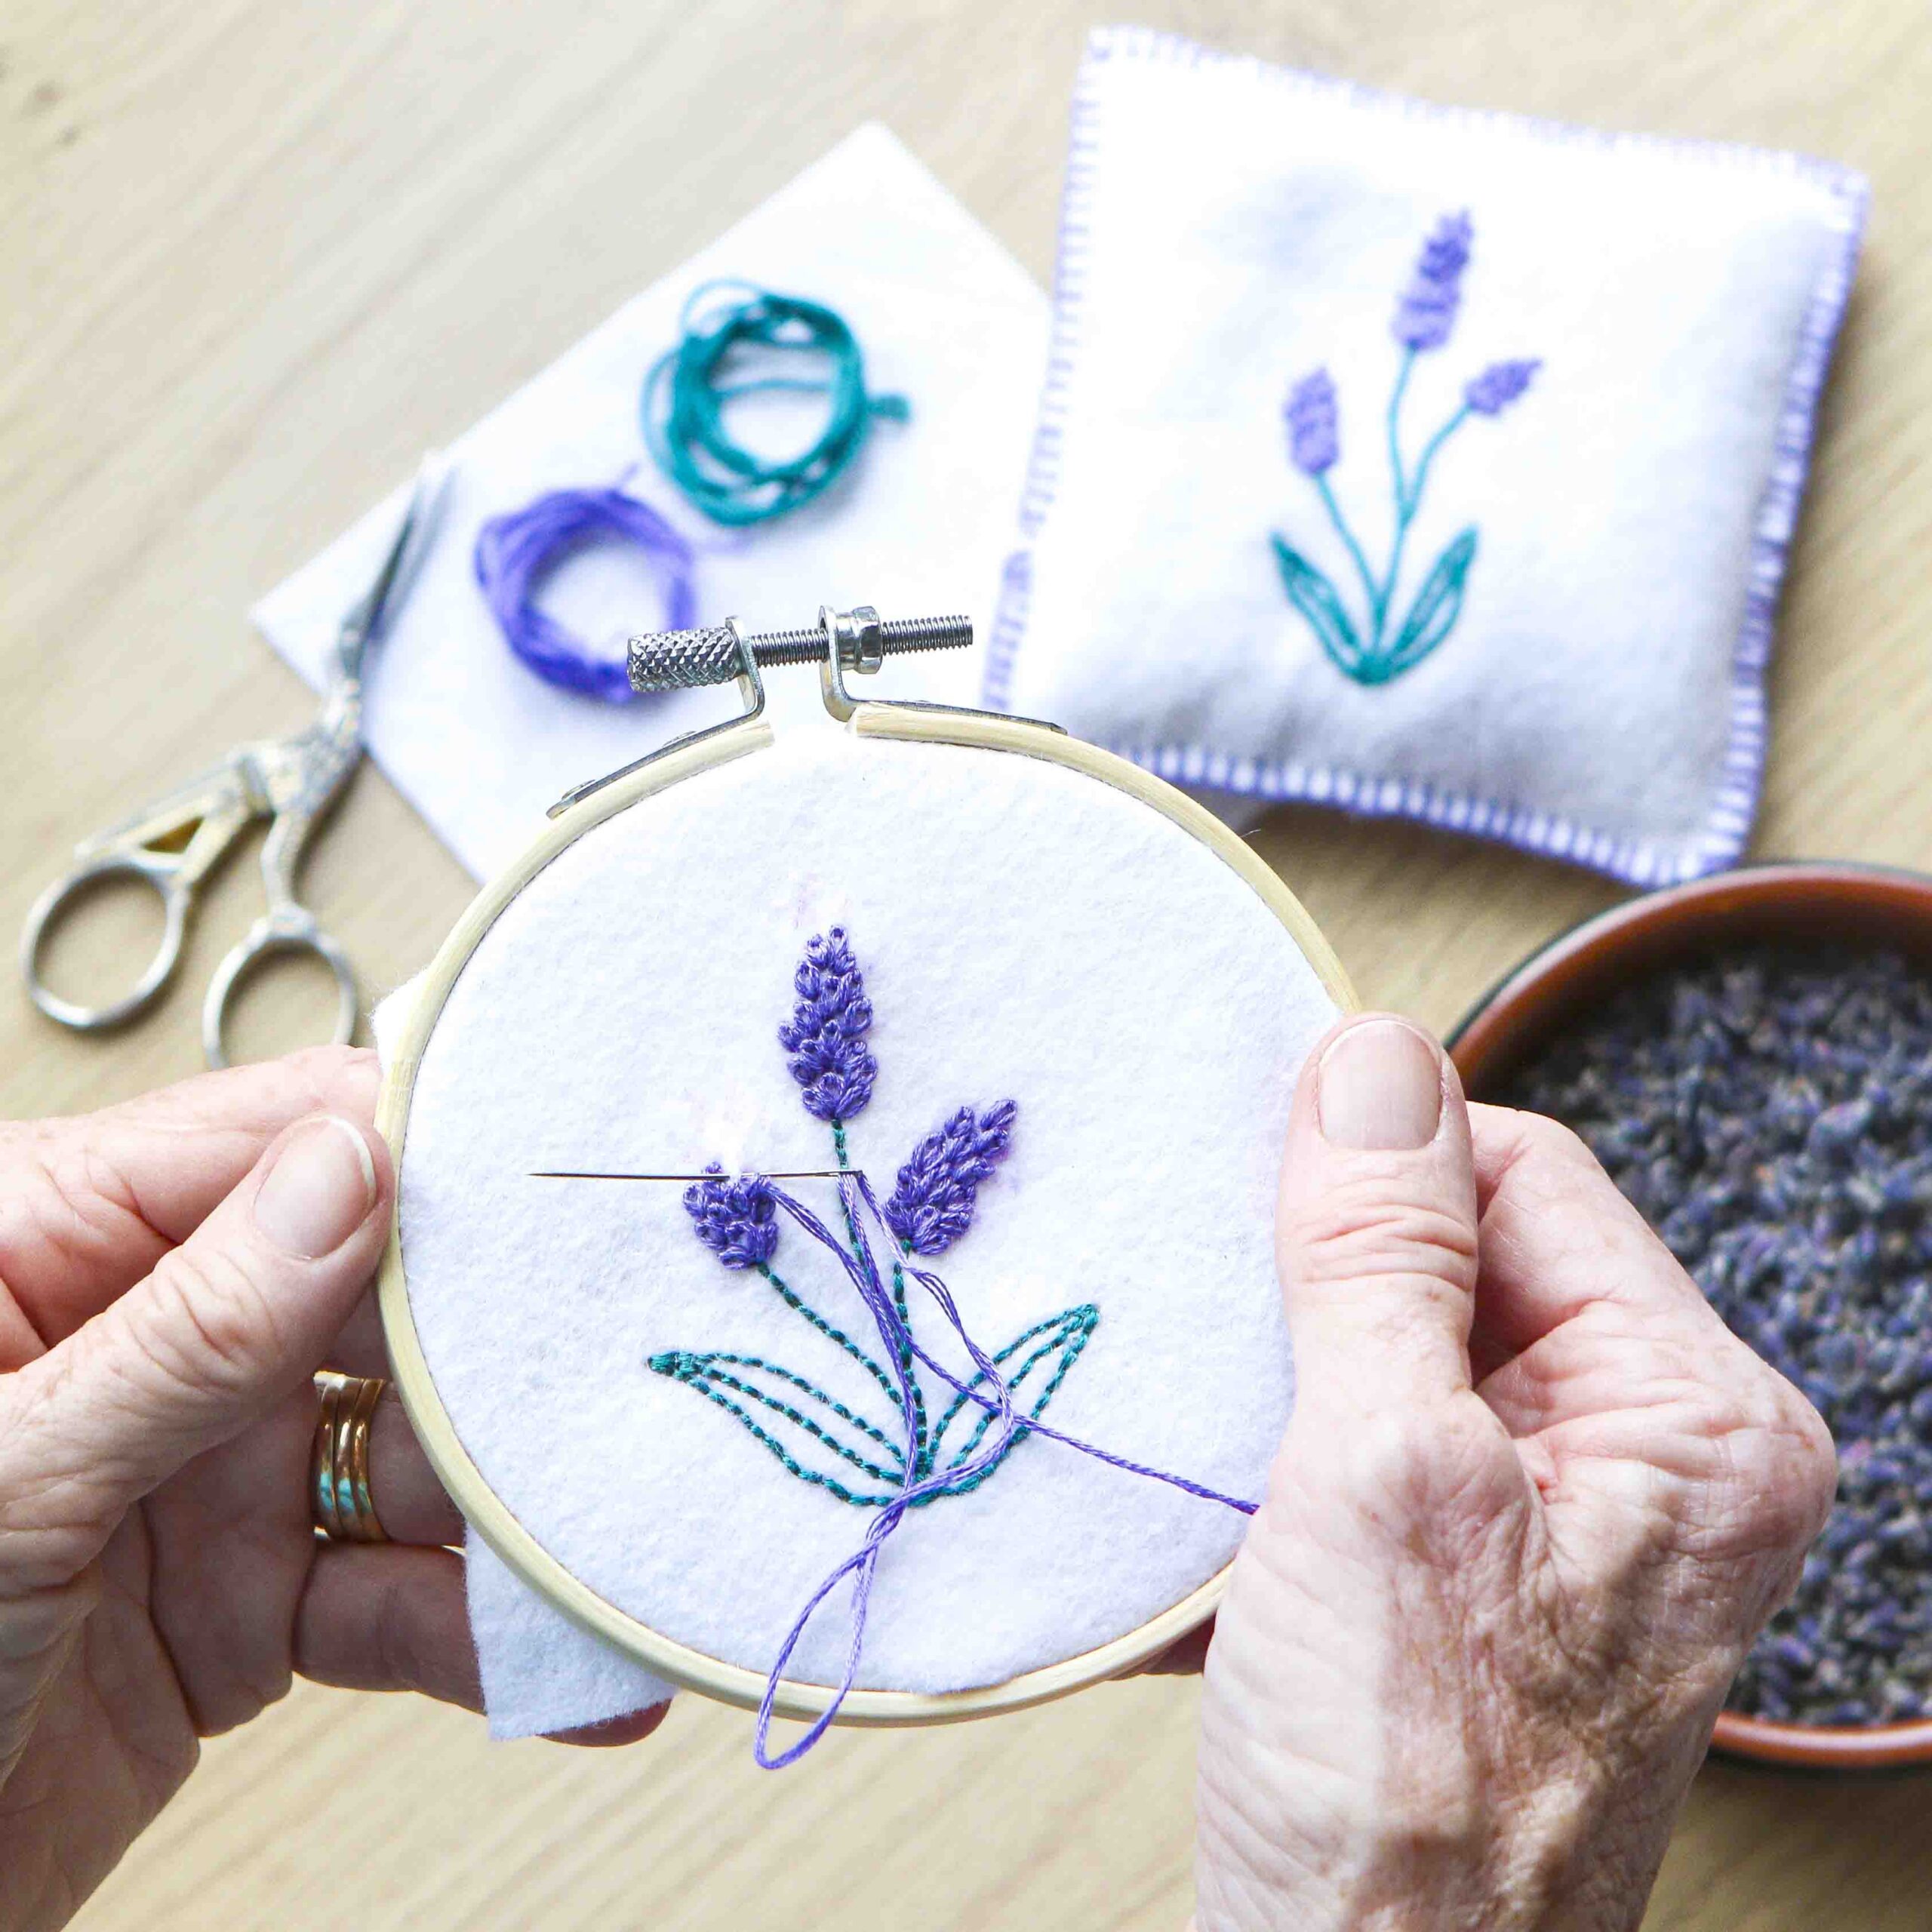 StephieAnn lavender bag hand embroidery workshop brighton